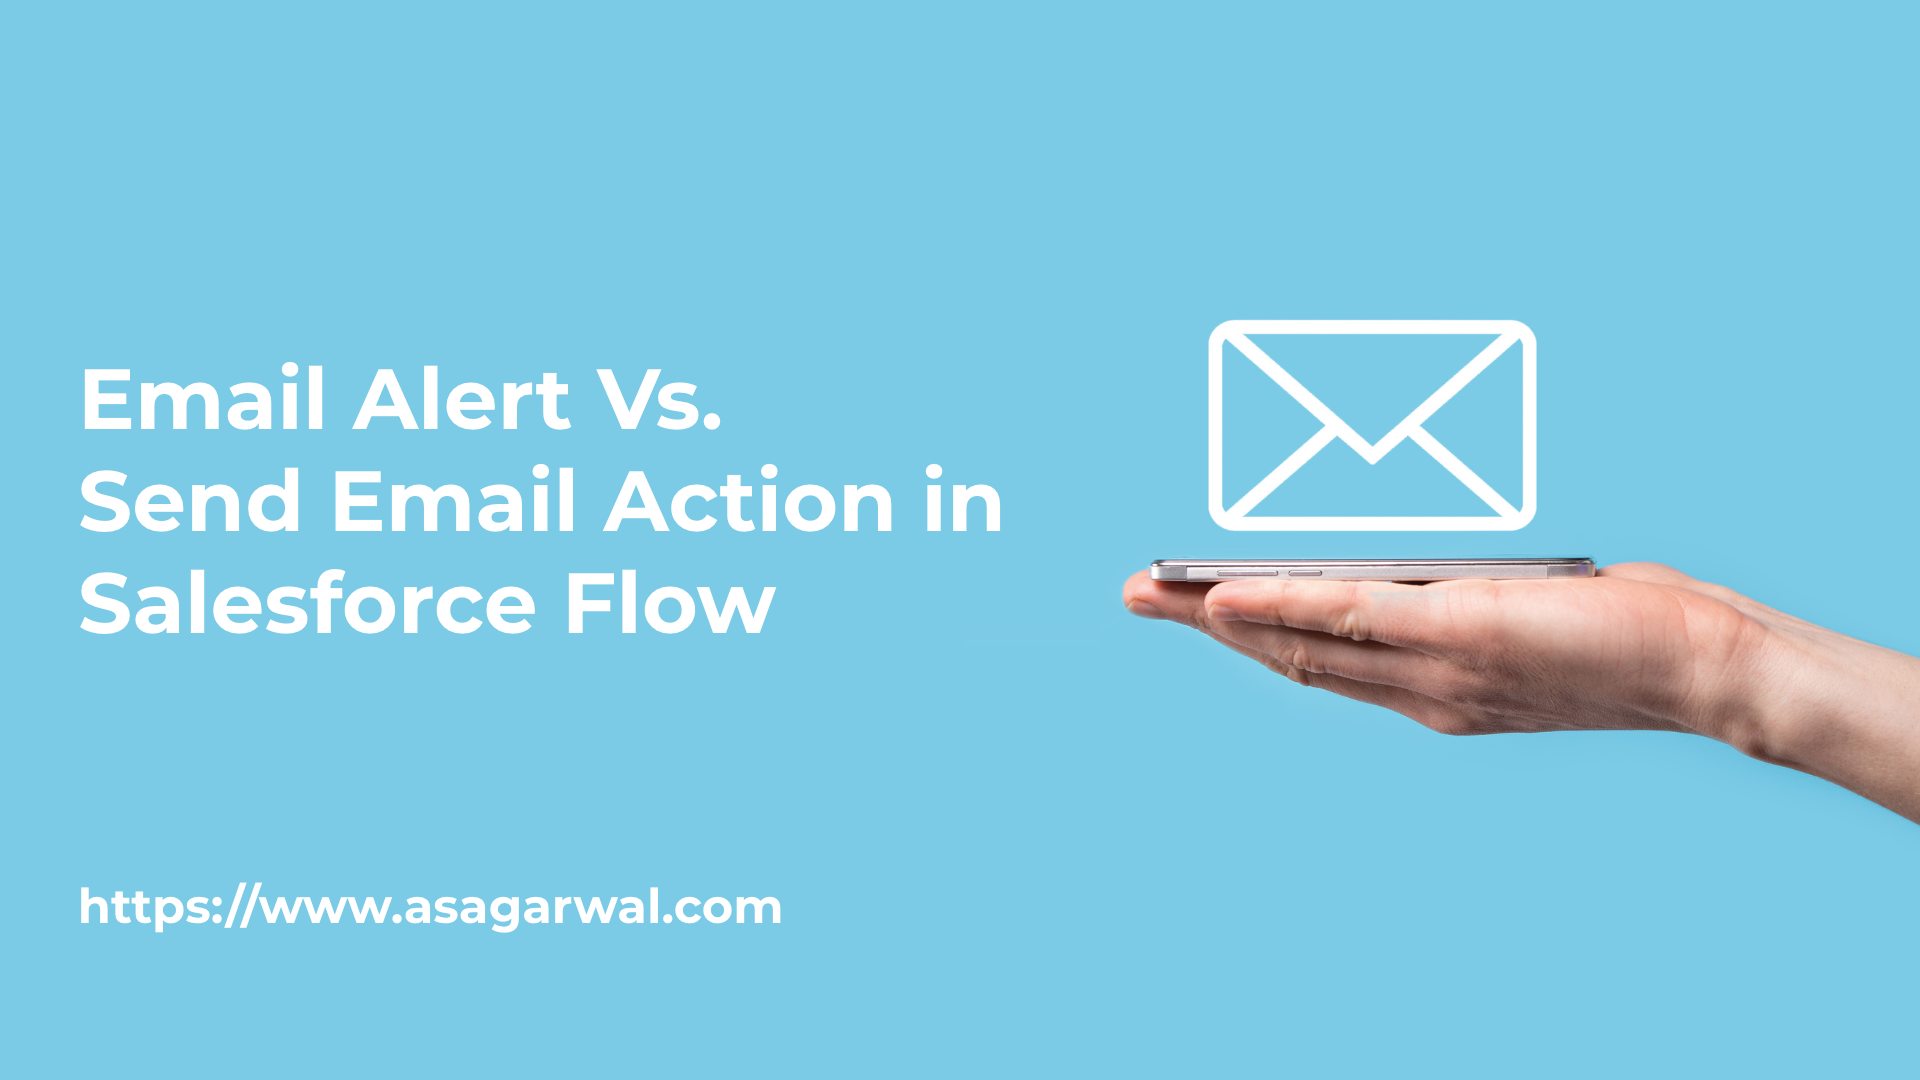 Email Alert Vs. Send Email Action in Salesforce Flow